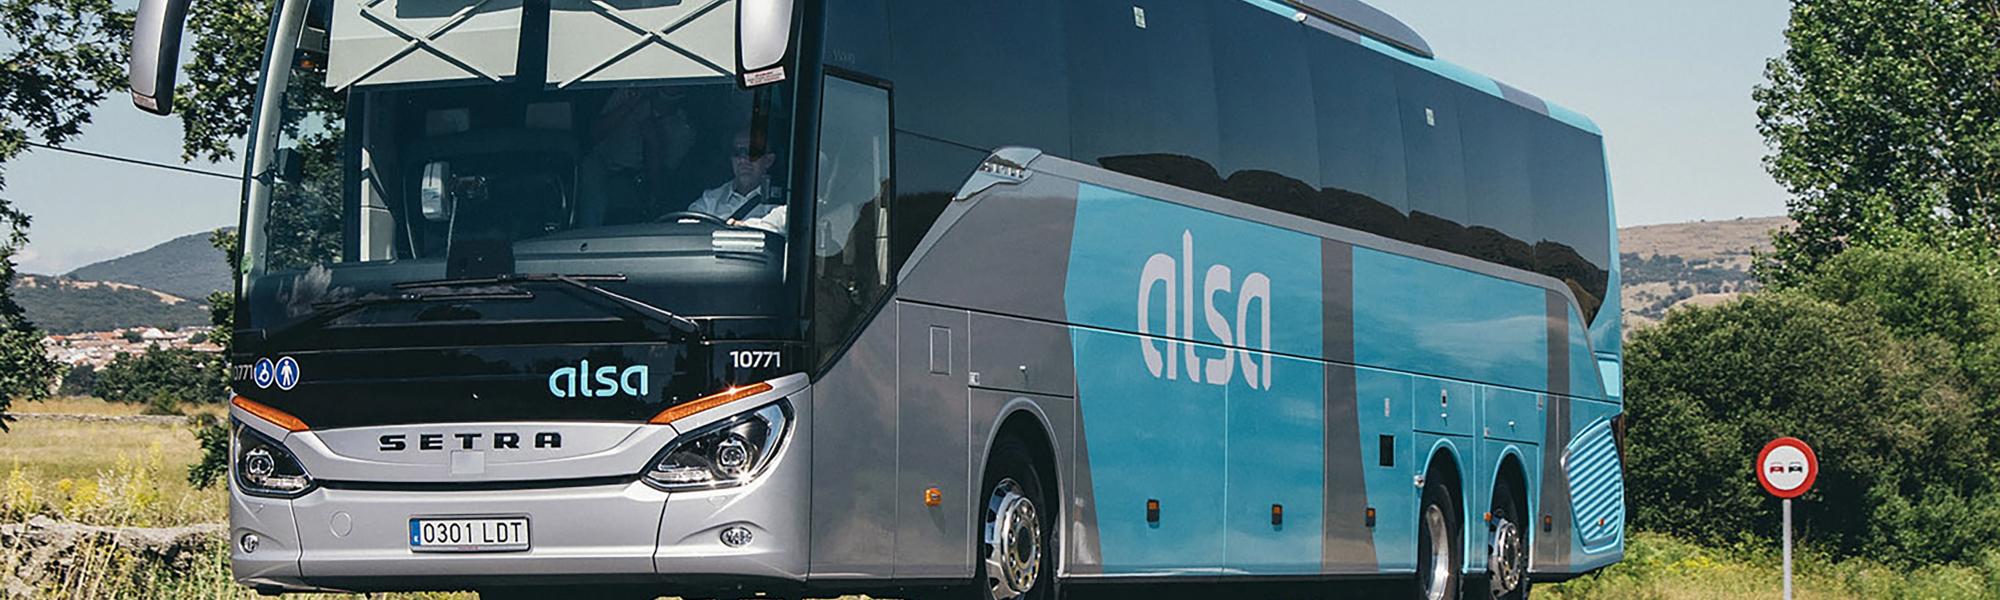 Passenger transport safety: the vision that drives Alsa 